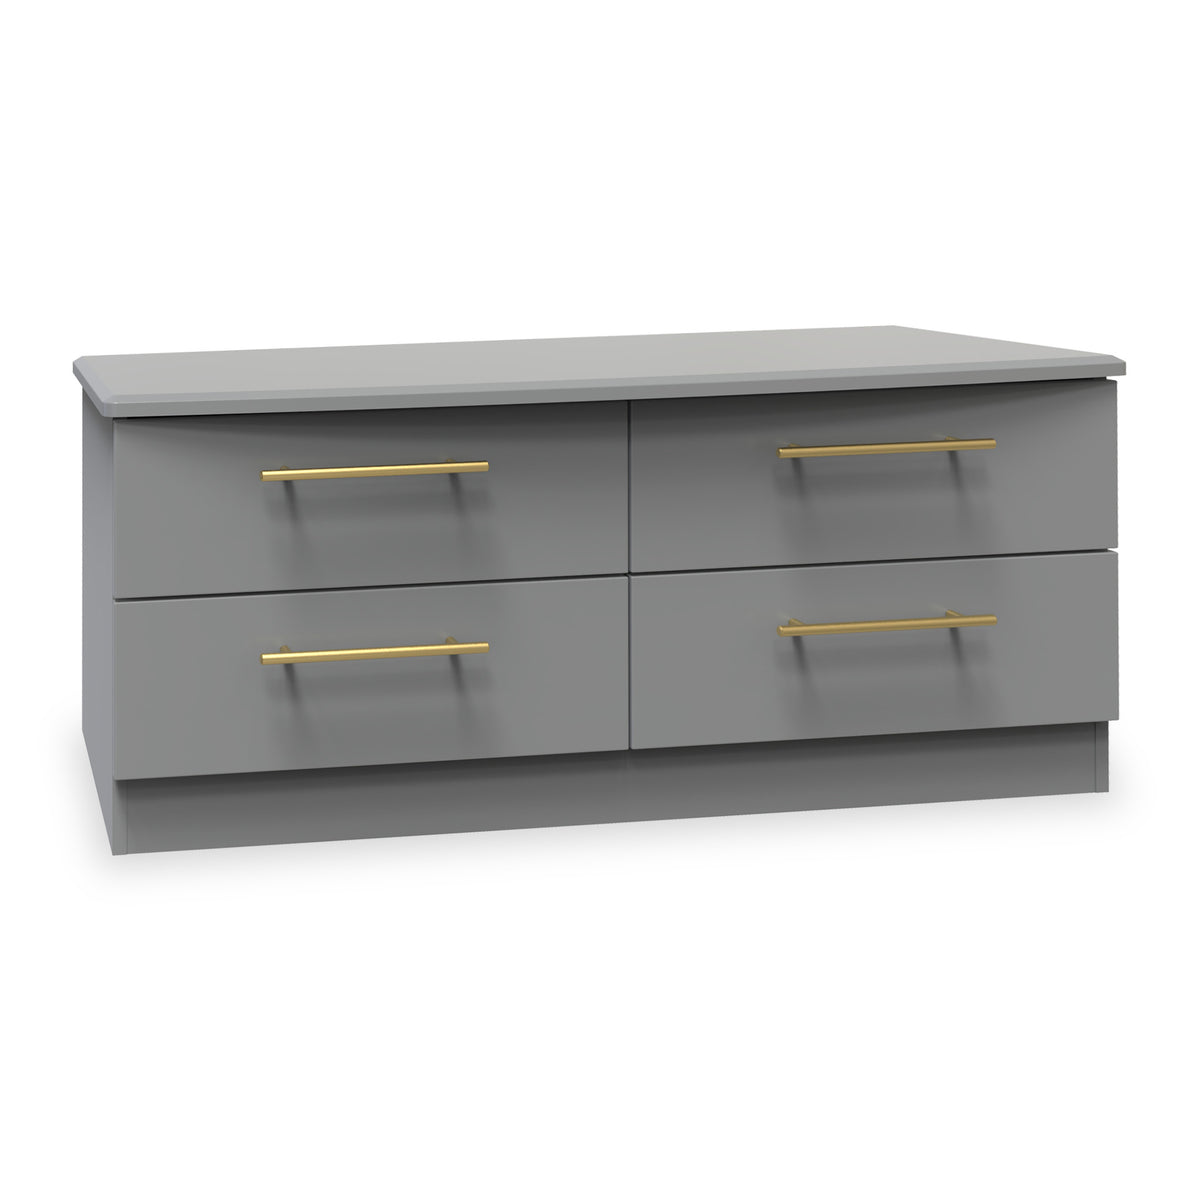 Bramham Grey 4 Drawer Low Storage Unit from Roseland Furniture